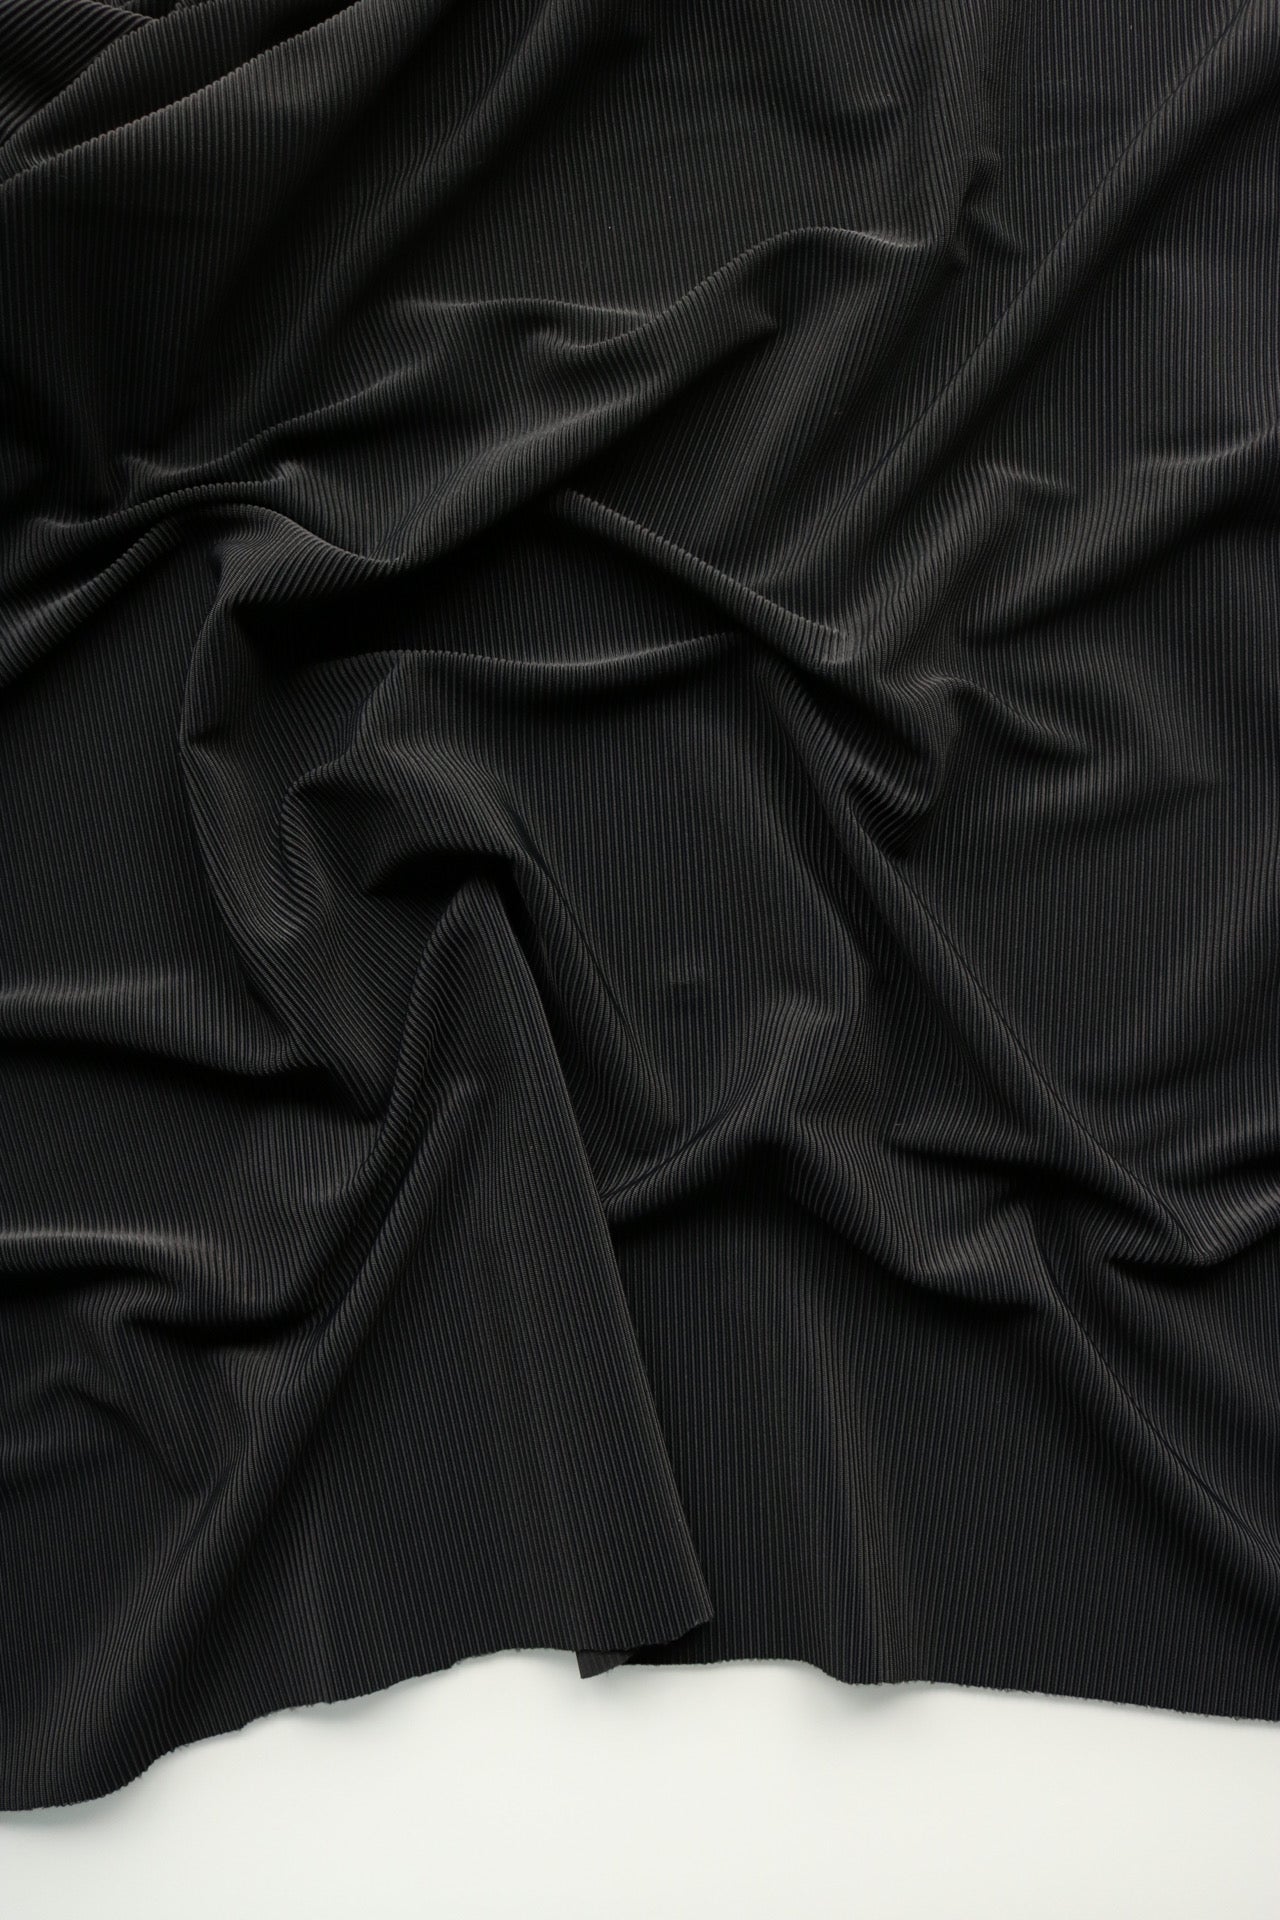 Black Polyester Spandex Leggings Fabric